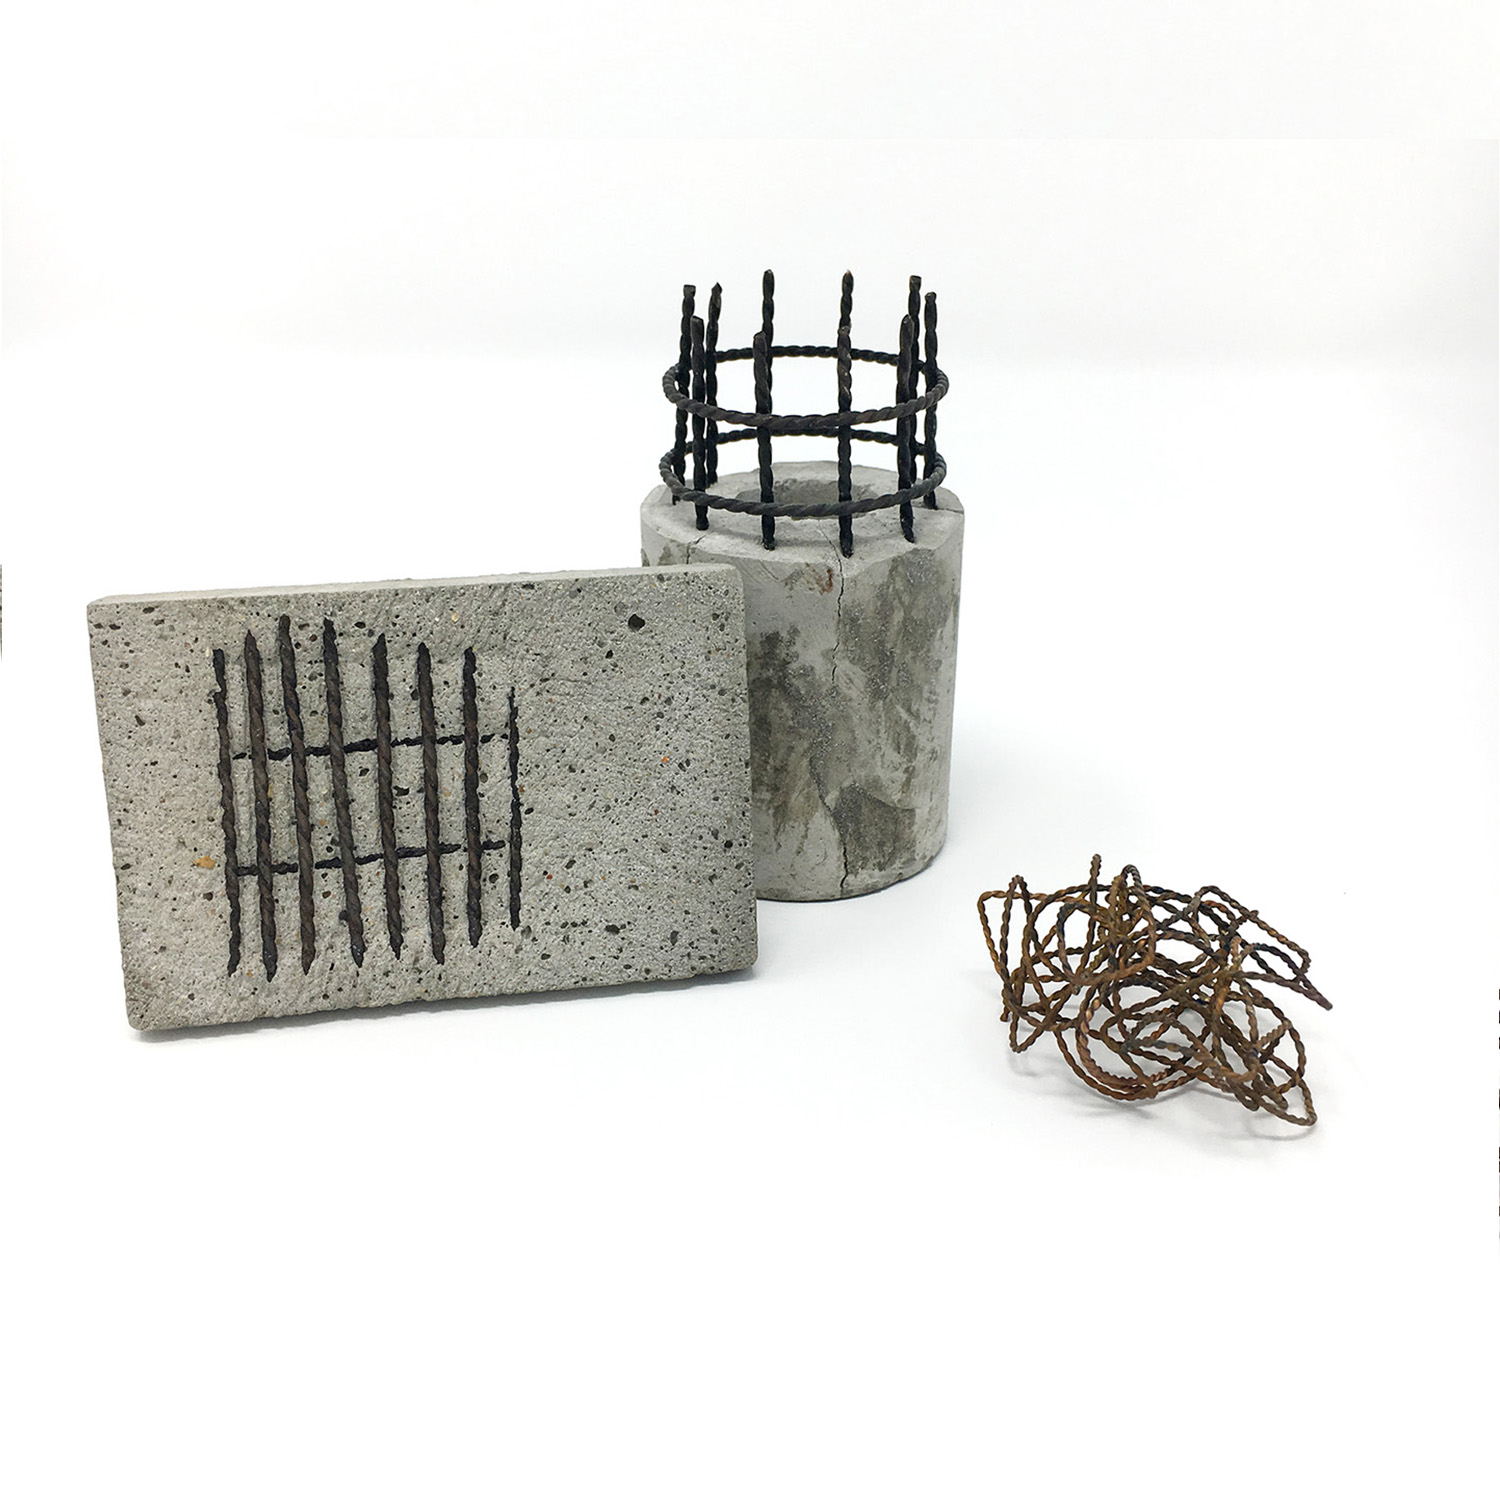 Natalie Macellaio - Construction Series - construction-sculpture